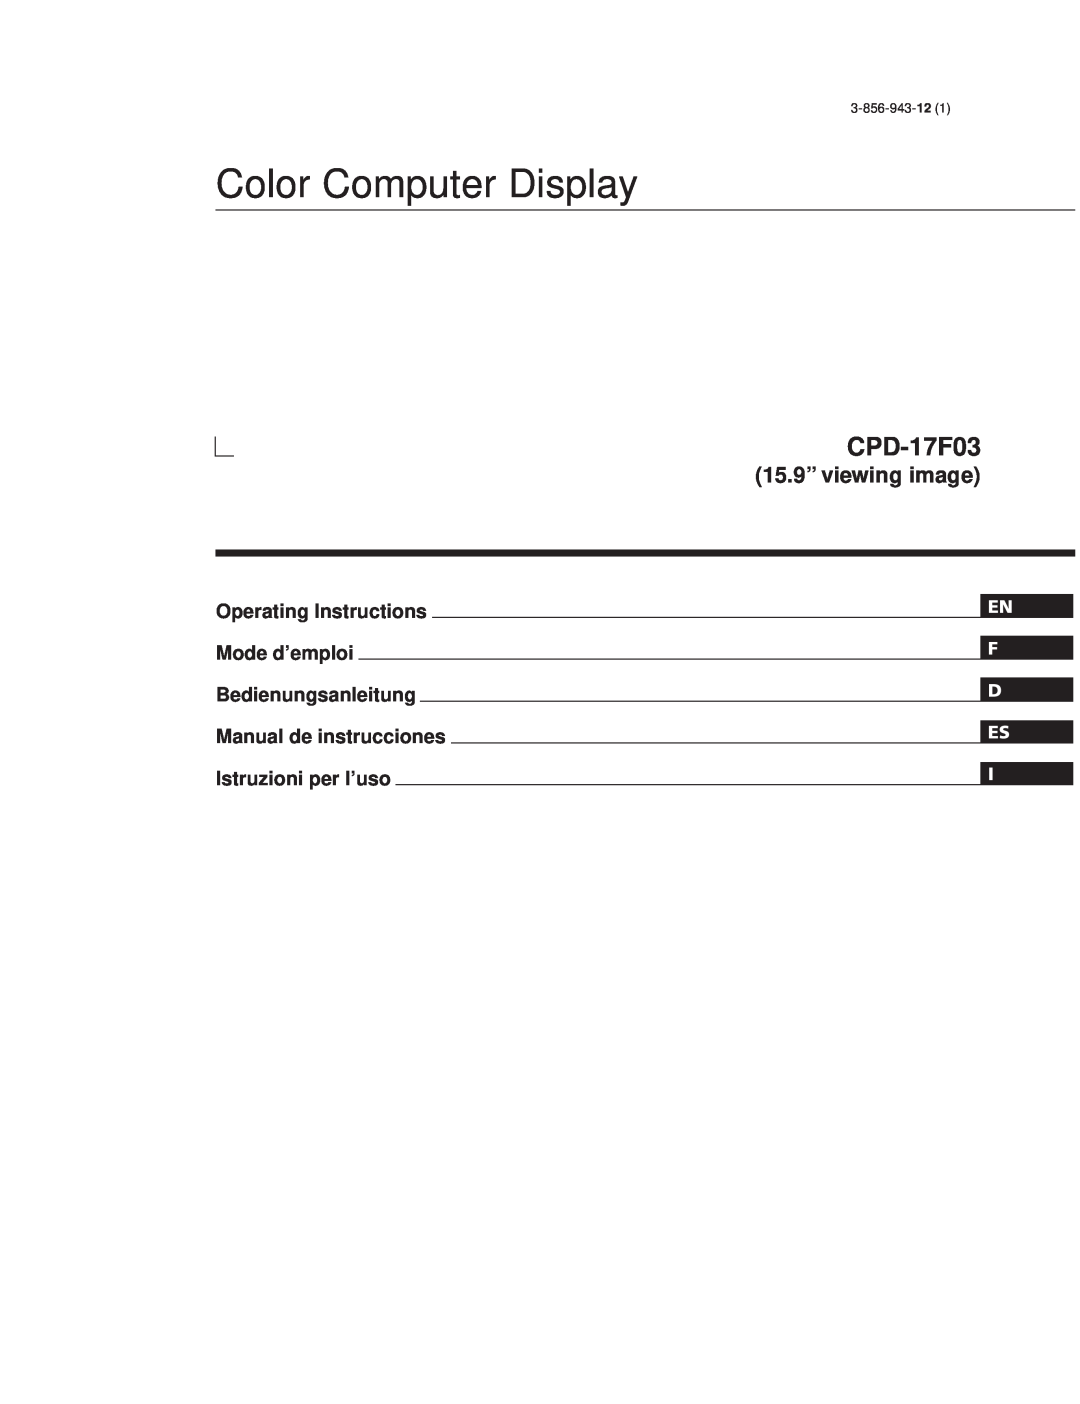 Sony CPD-17F03 manual En F D Es I, Color Computer Display, 15.9” viewing image, 3-856-943-12 